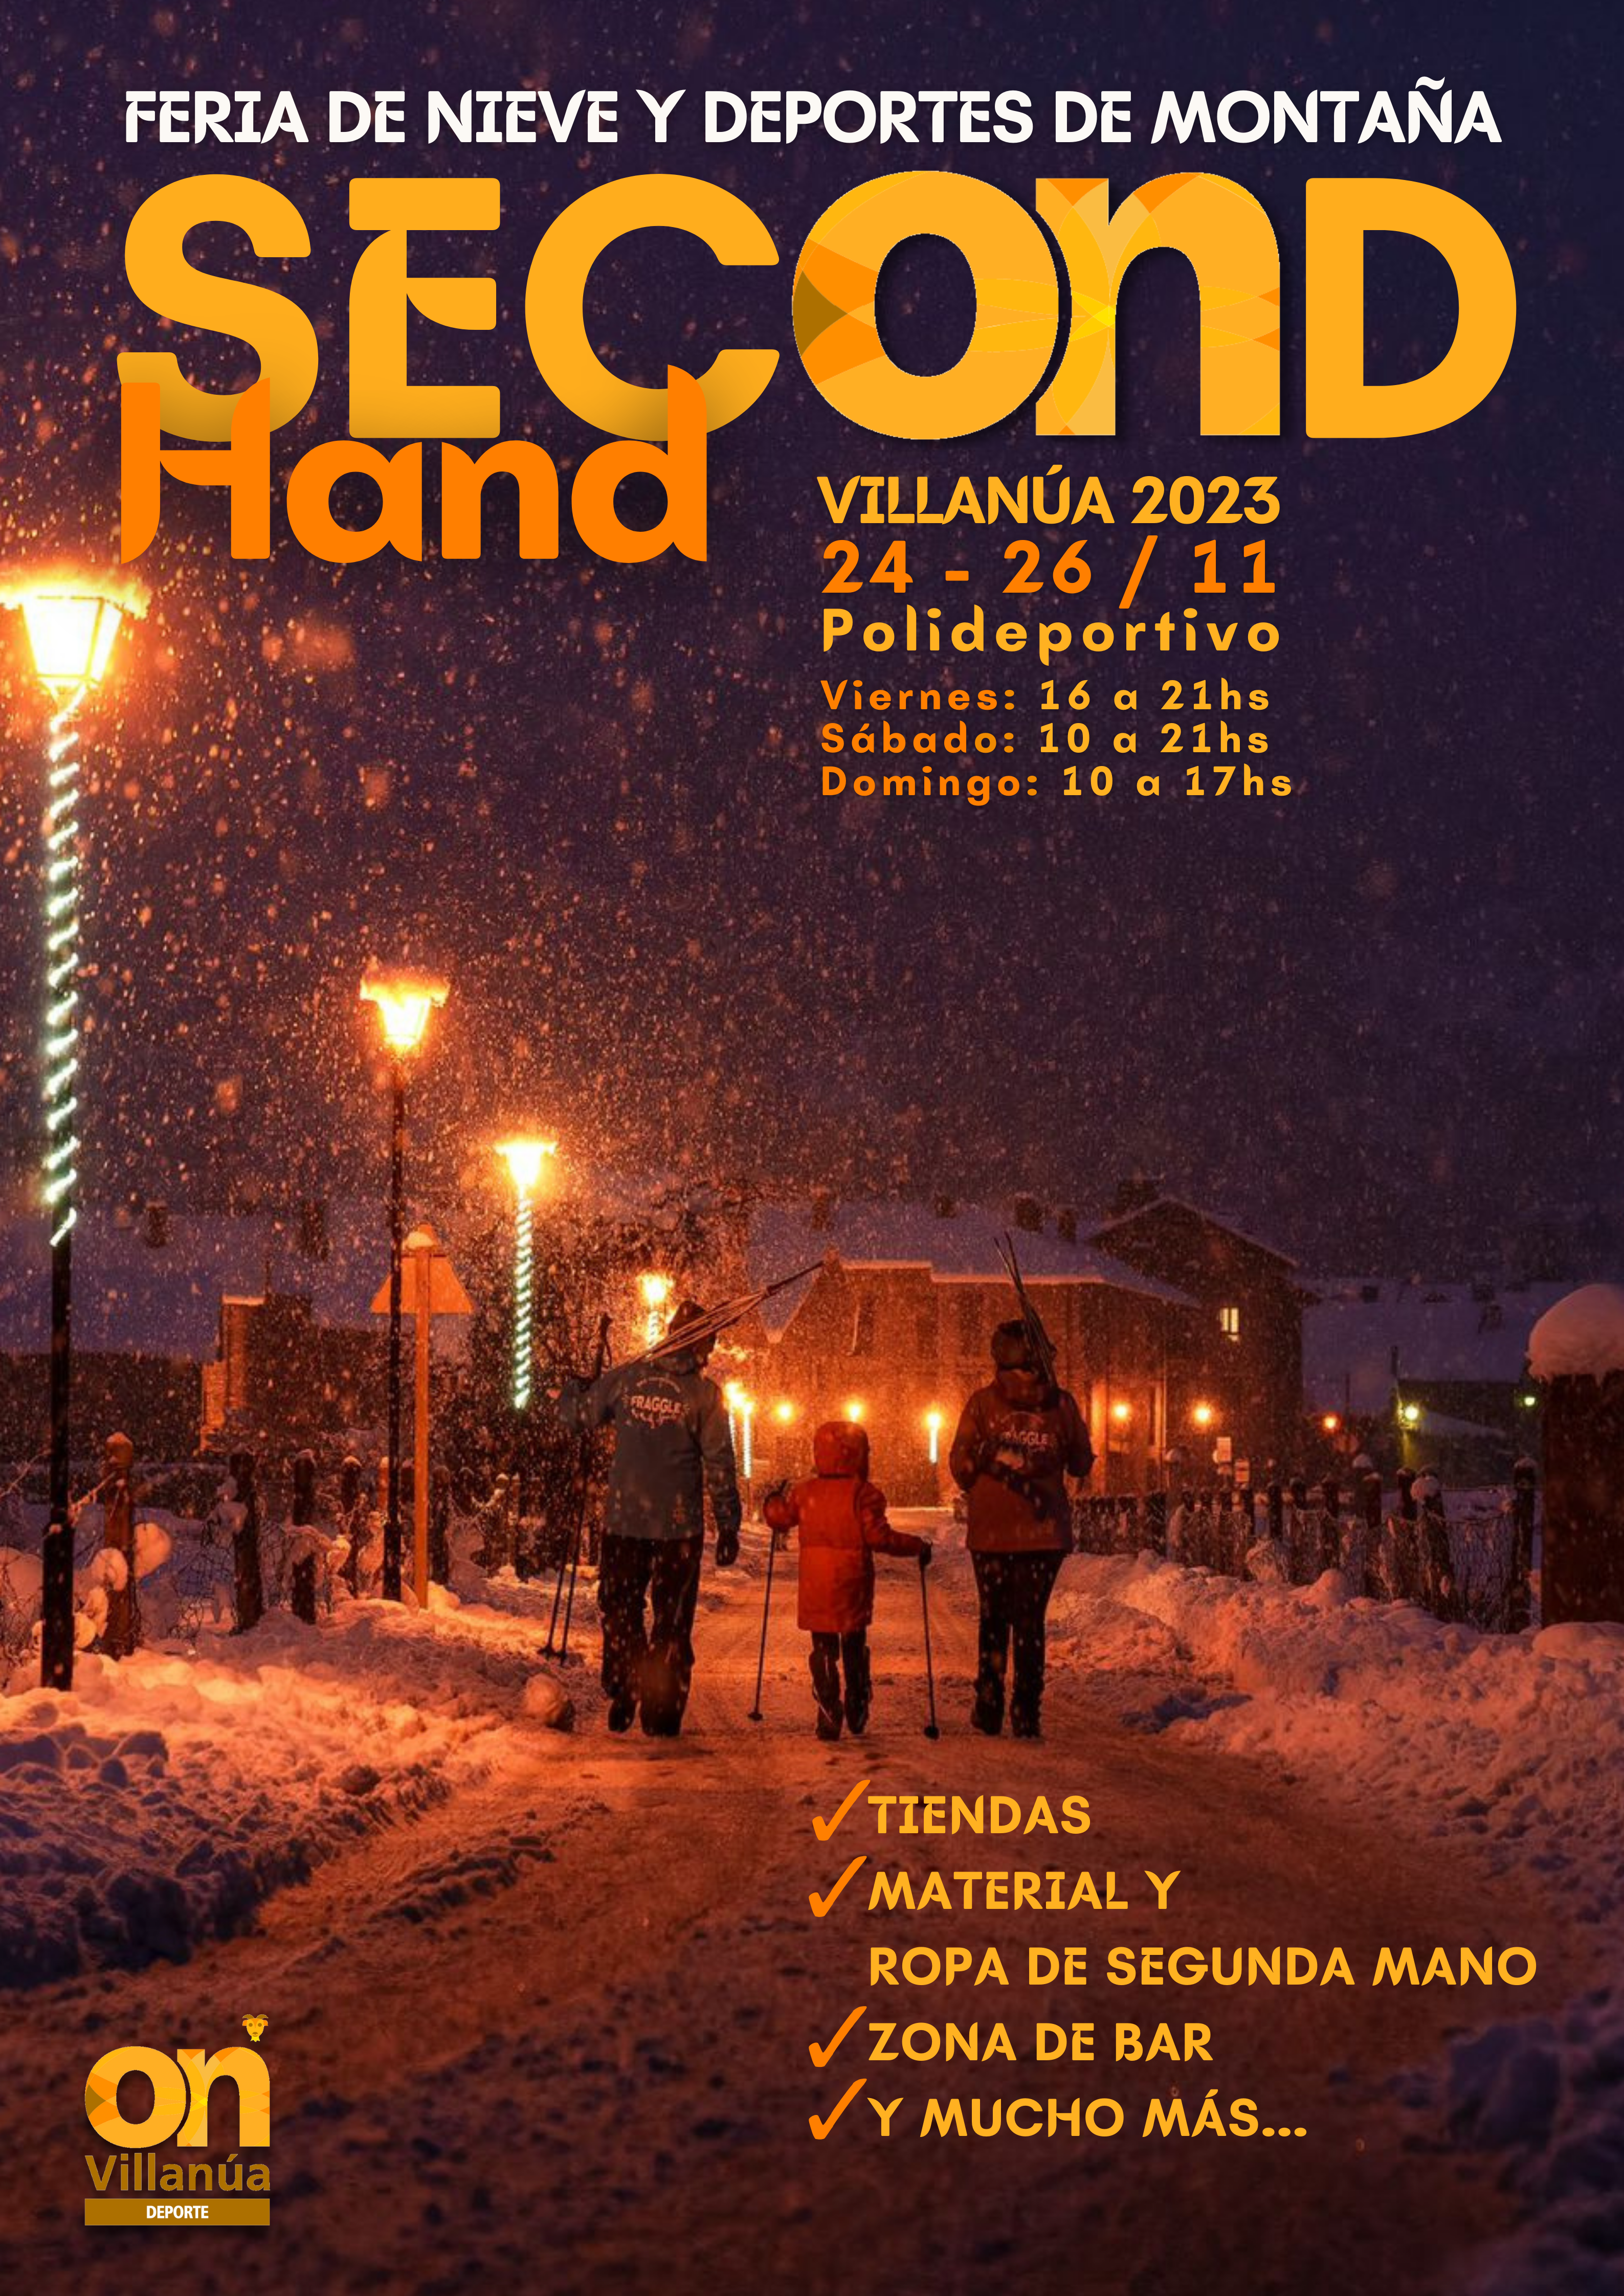 La Feria Outlet de la Nieve vuelve a León, Bilbao y Oviedo - MEGASKI 